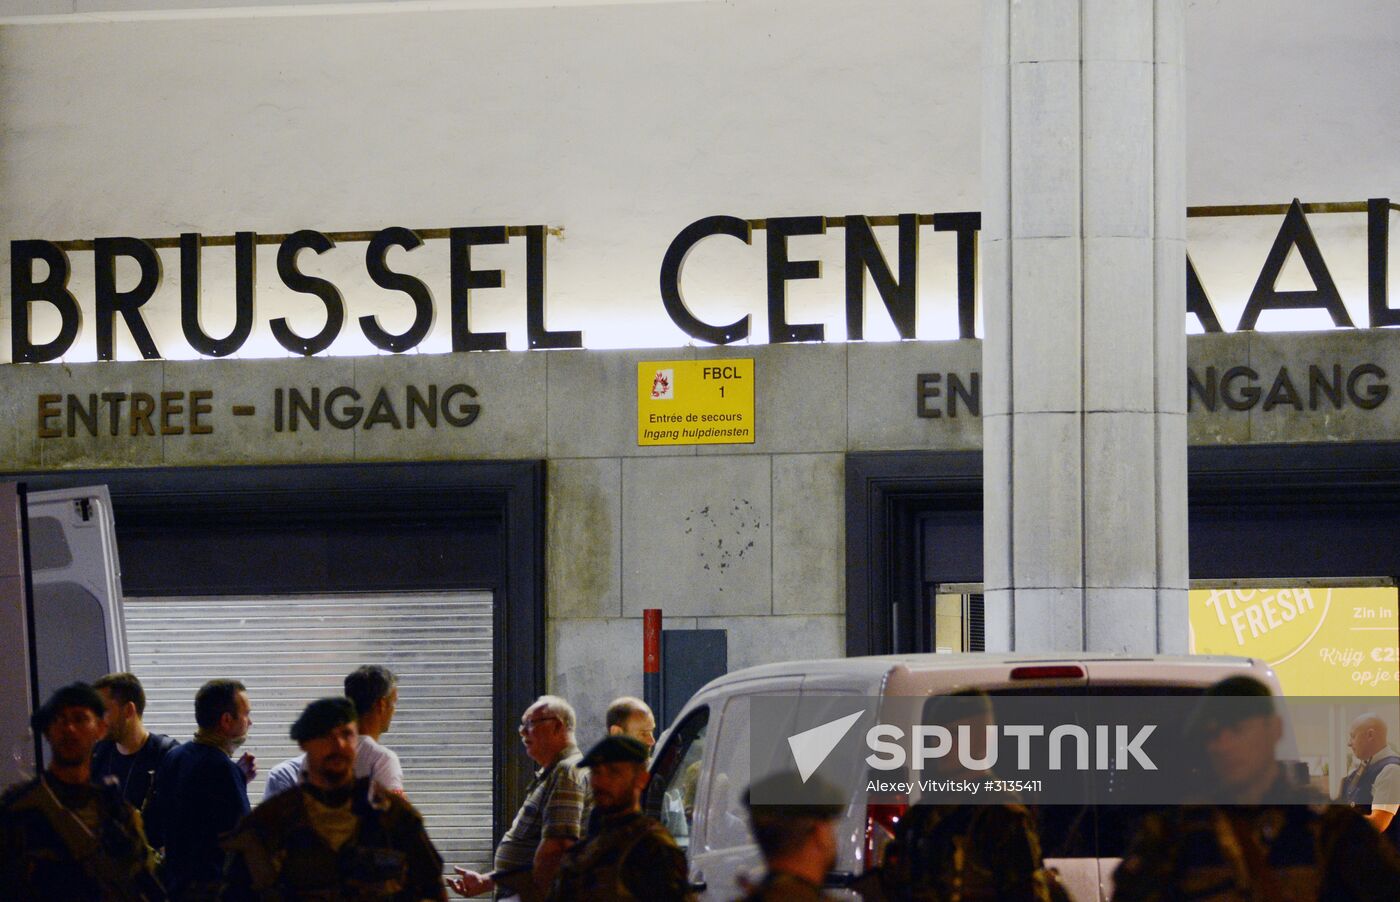 Terrorist attack at Brussels Central Station